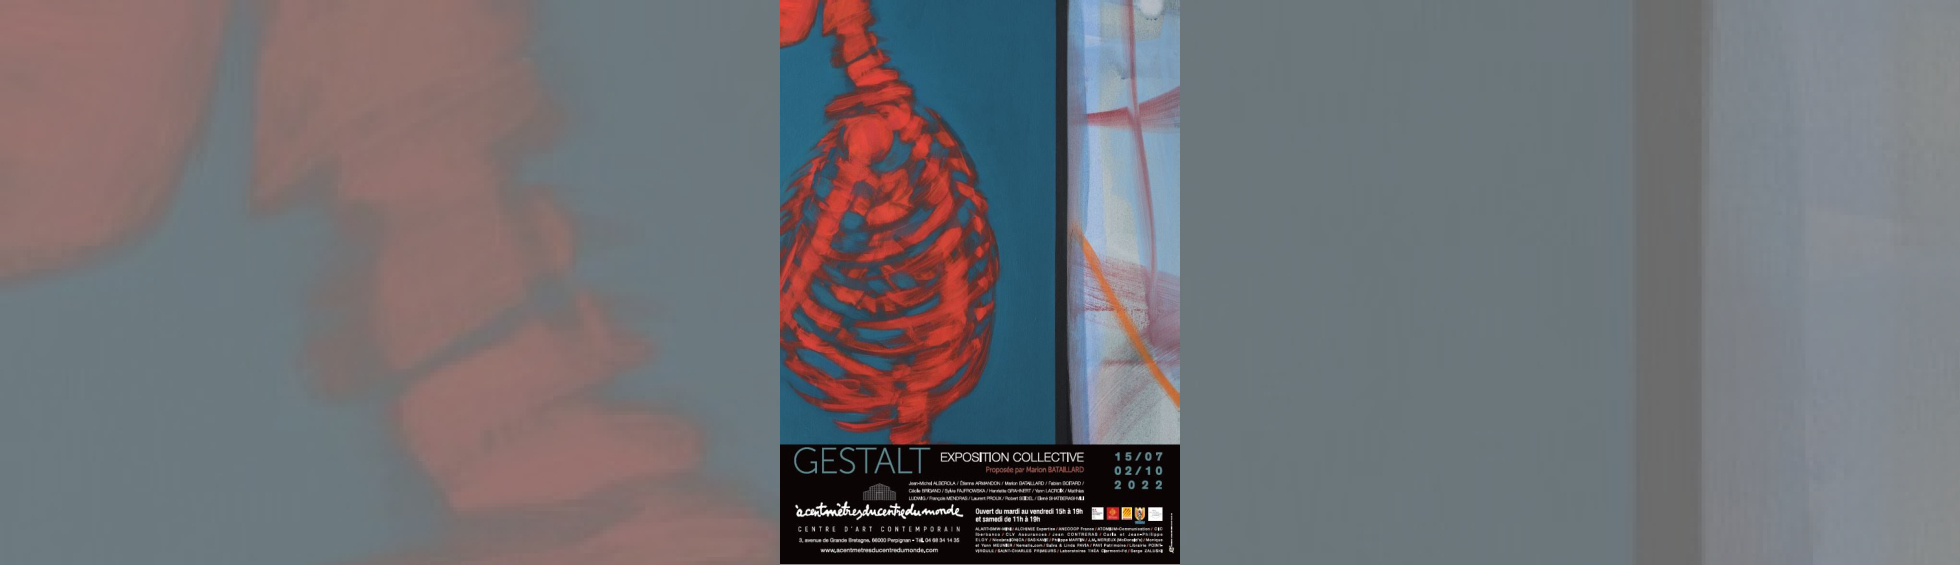 Exposition collective "GESTALT"